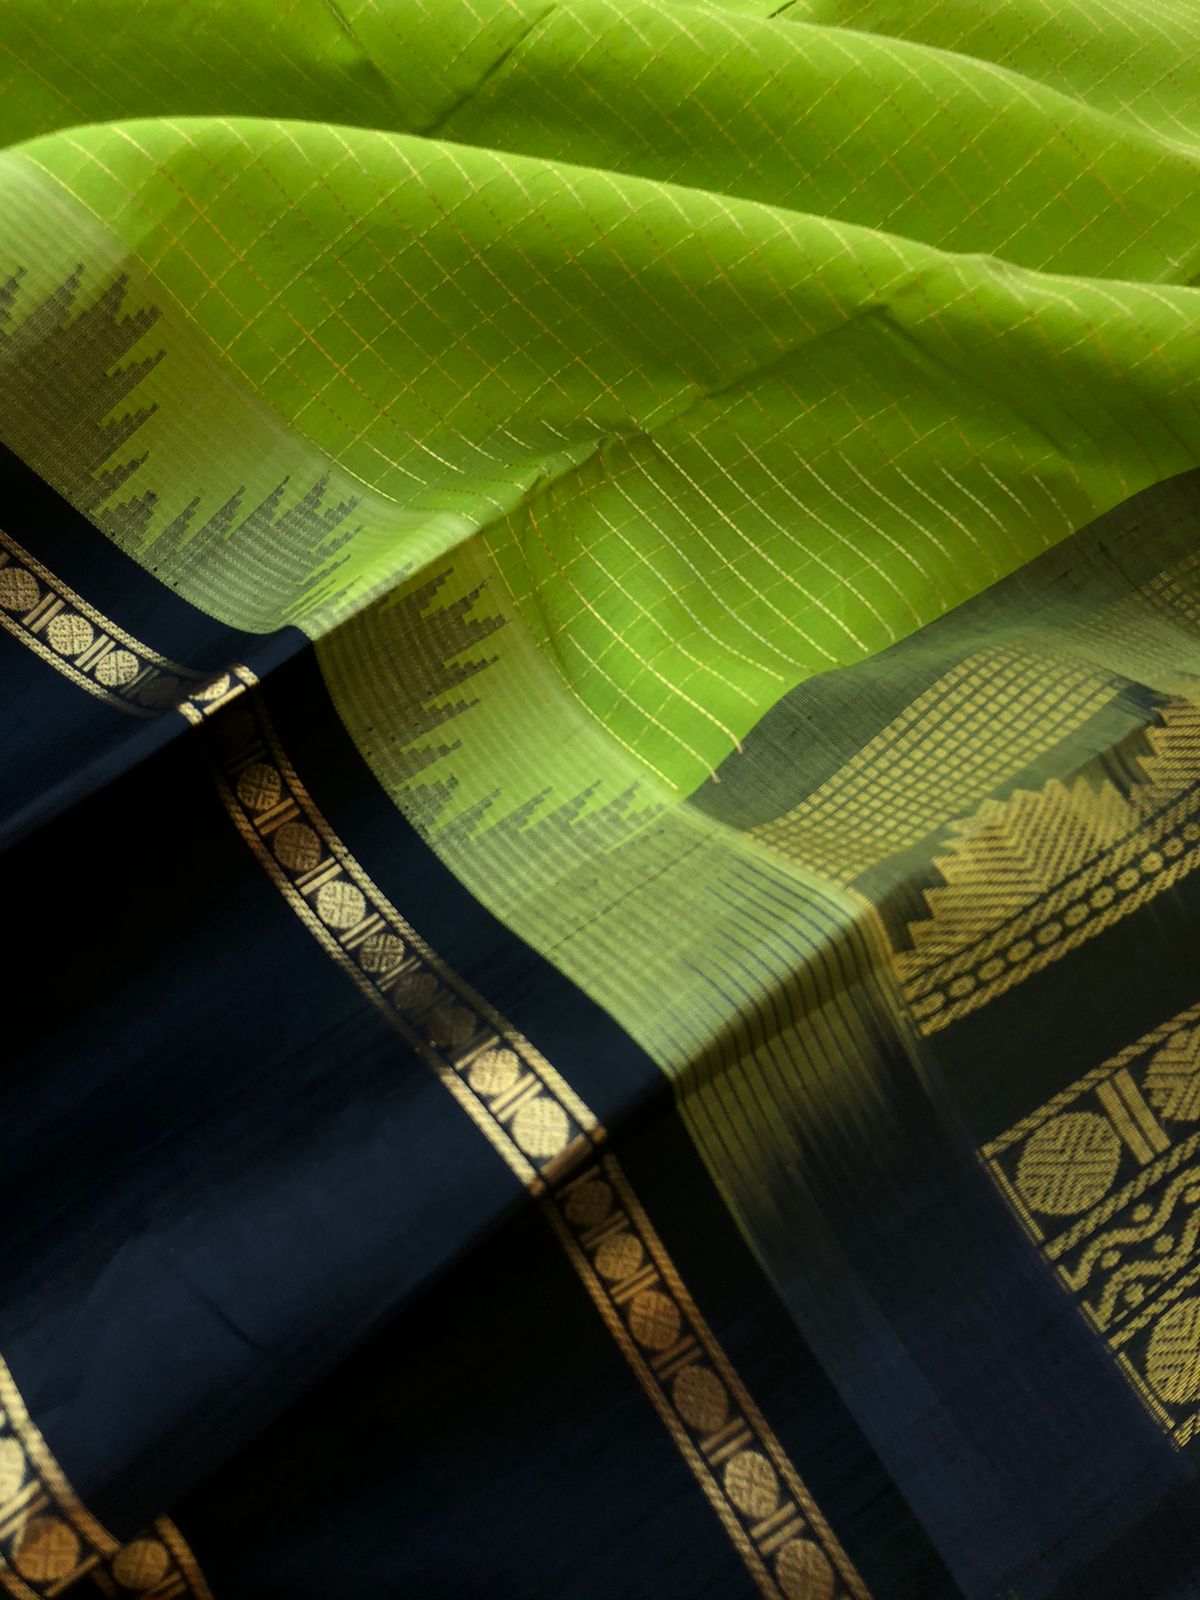 Kattams on Korvai Silk Cotton - pale green and black zari kattam